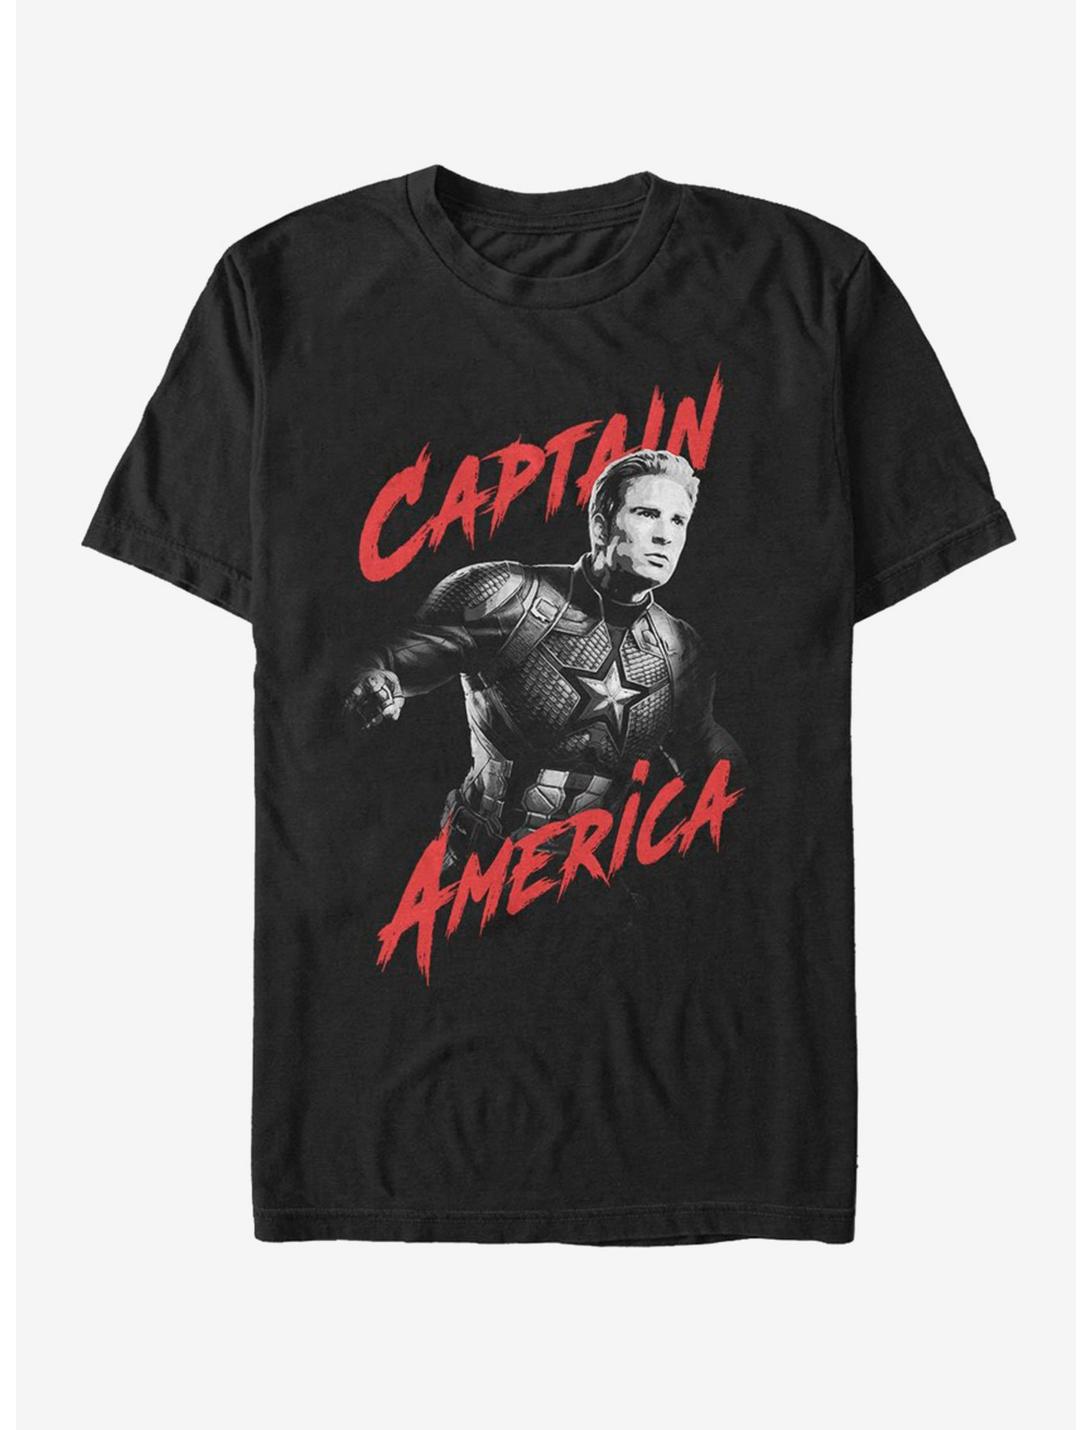 Marvel Avengers Endgame High Contrast America T-Shirt, BLACK, hi-res